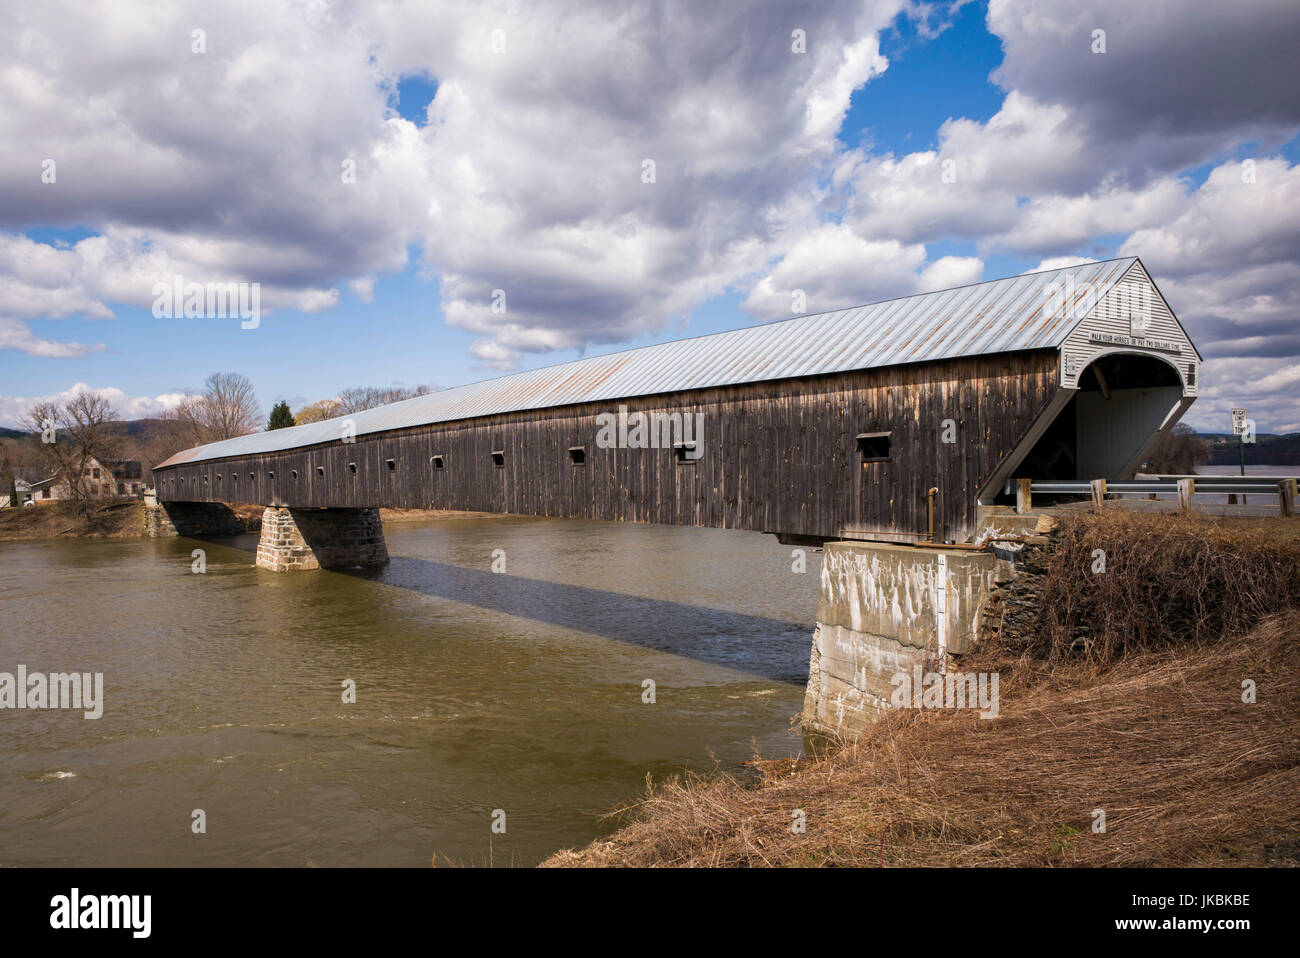 USA, New Hampshire, Cornish, Corinish NH-Windsor VT covered Bridge over the Connecticut River Stock Photo